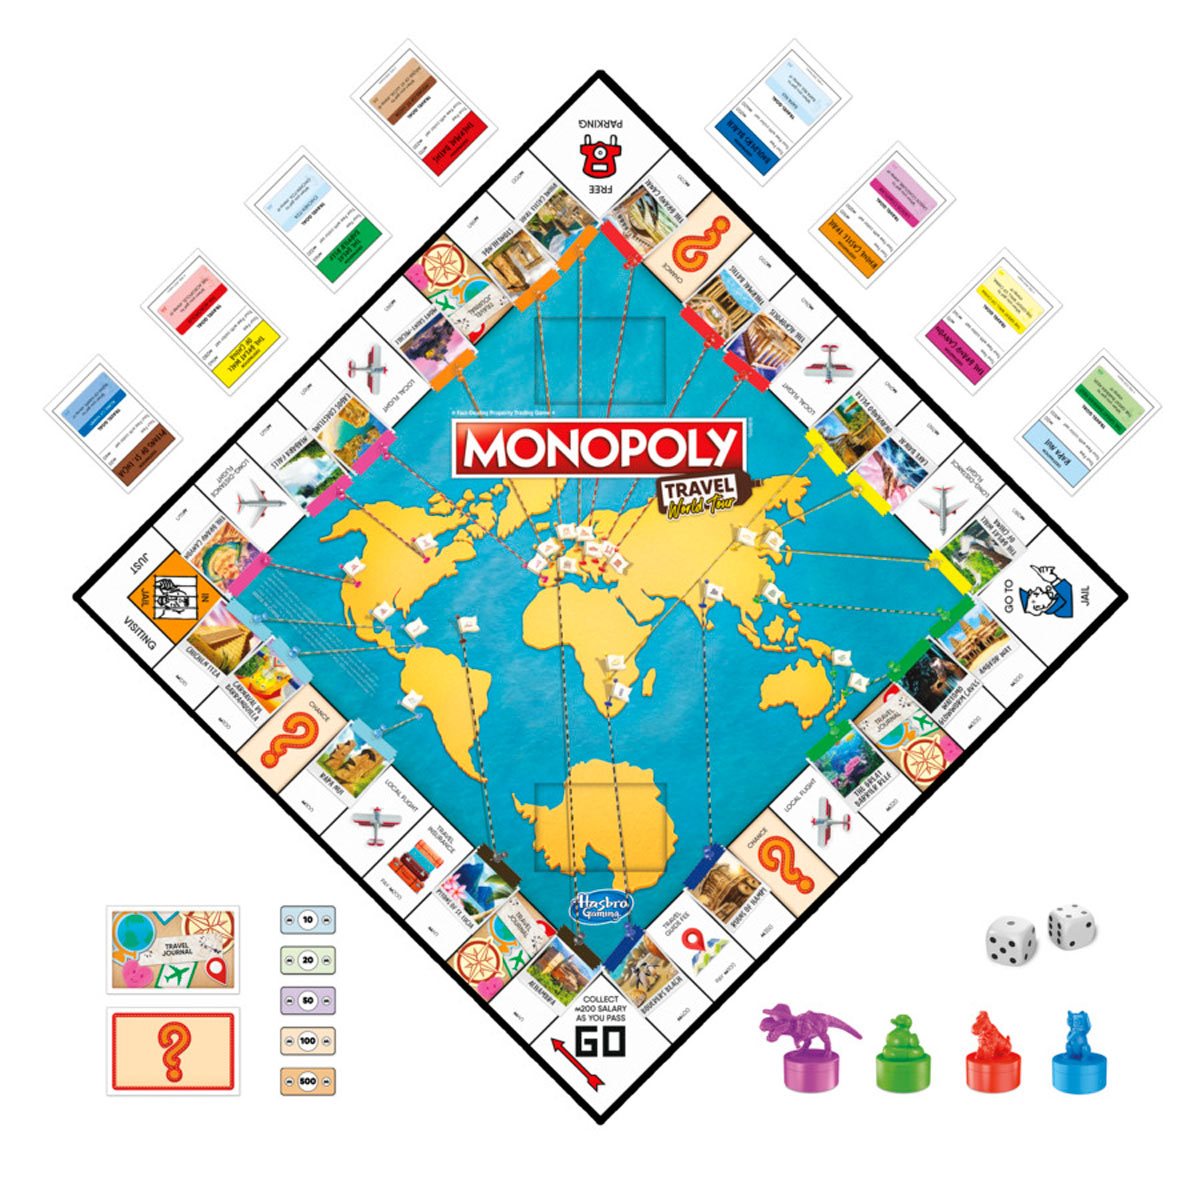 monopoly travel world tour properties